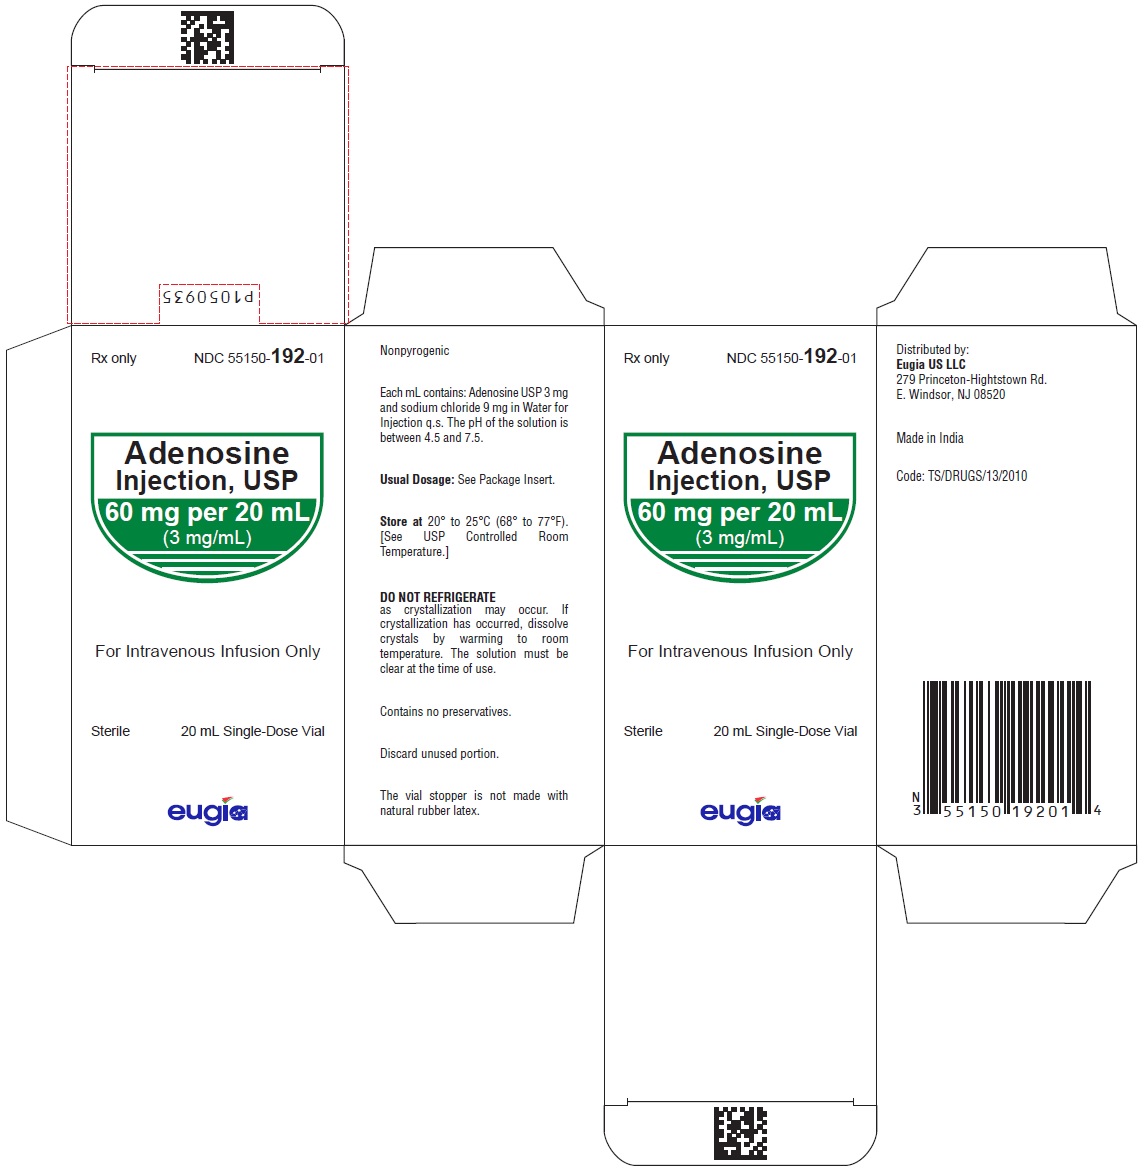 PACKAGE LABEL-PRINCIPAL DISPLAY PANEL - 60 mg per 20 mL (3 mg/mL) - Container-Carton (1 Vial)